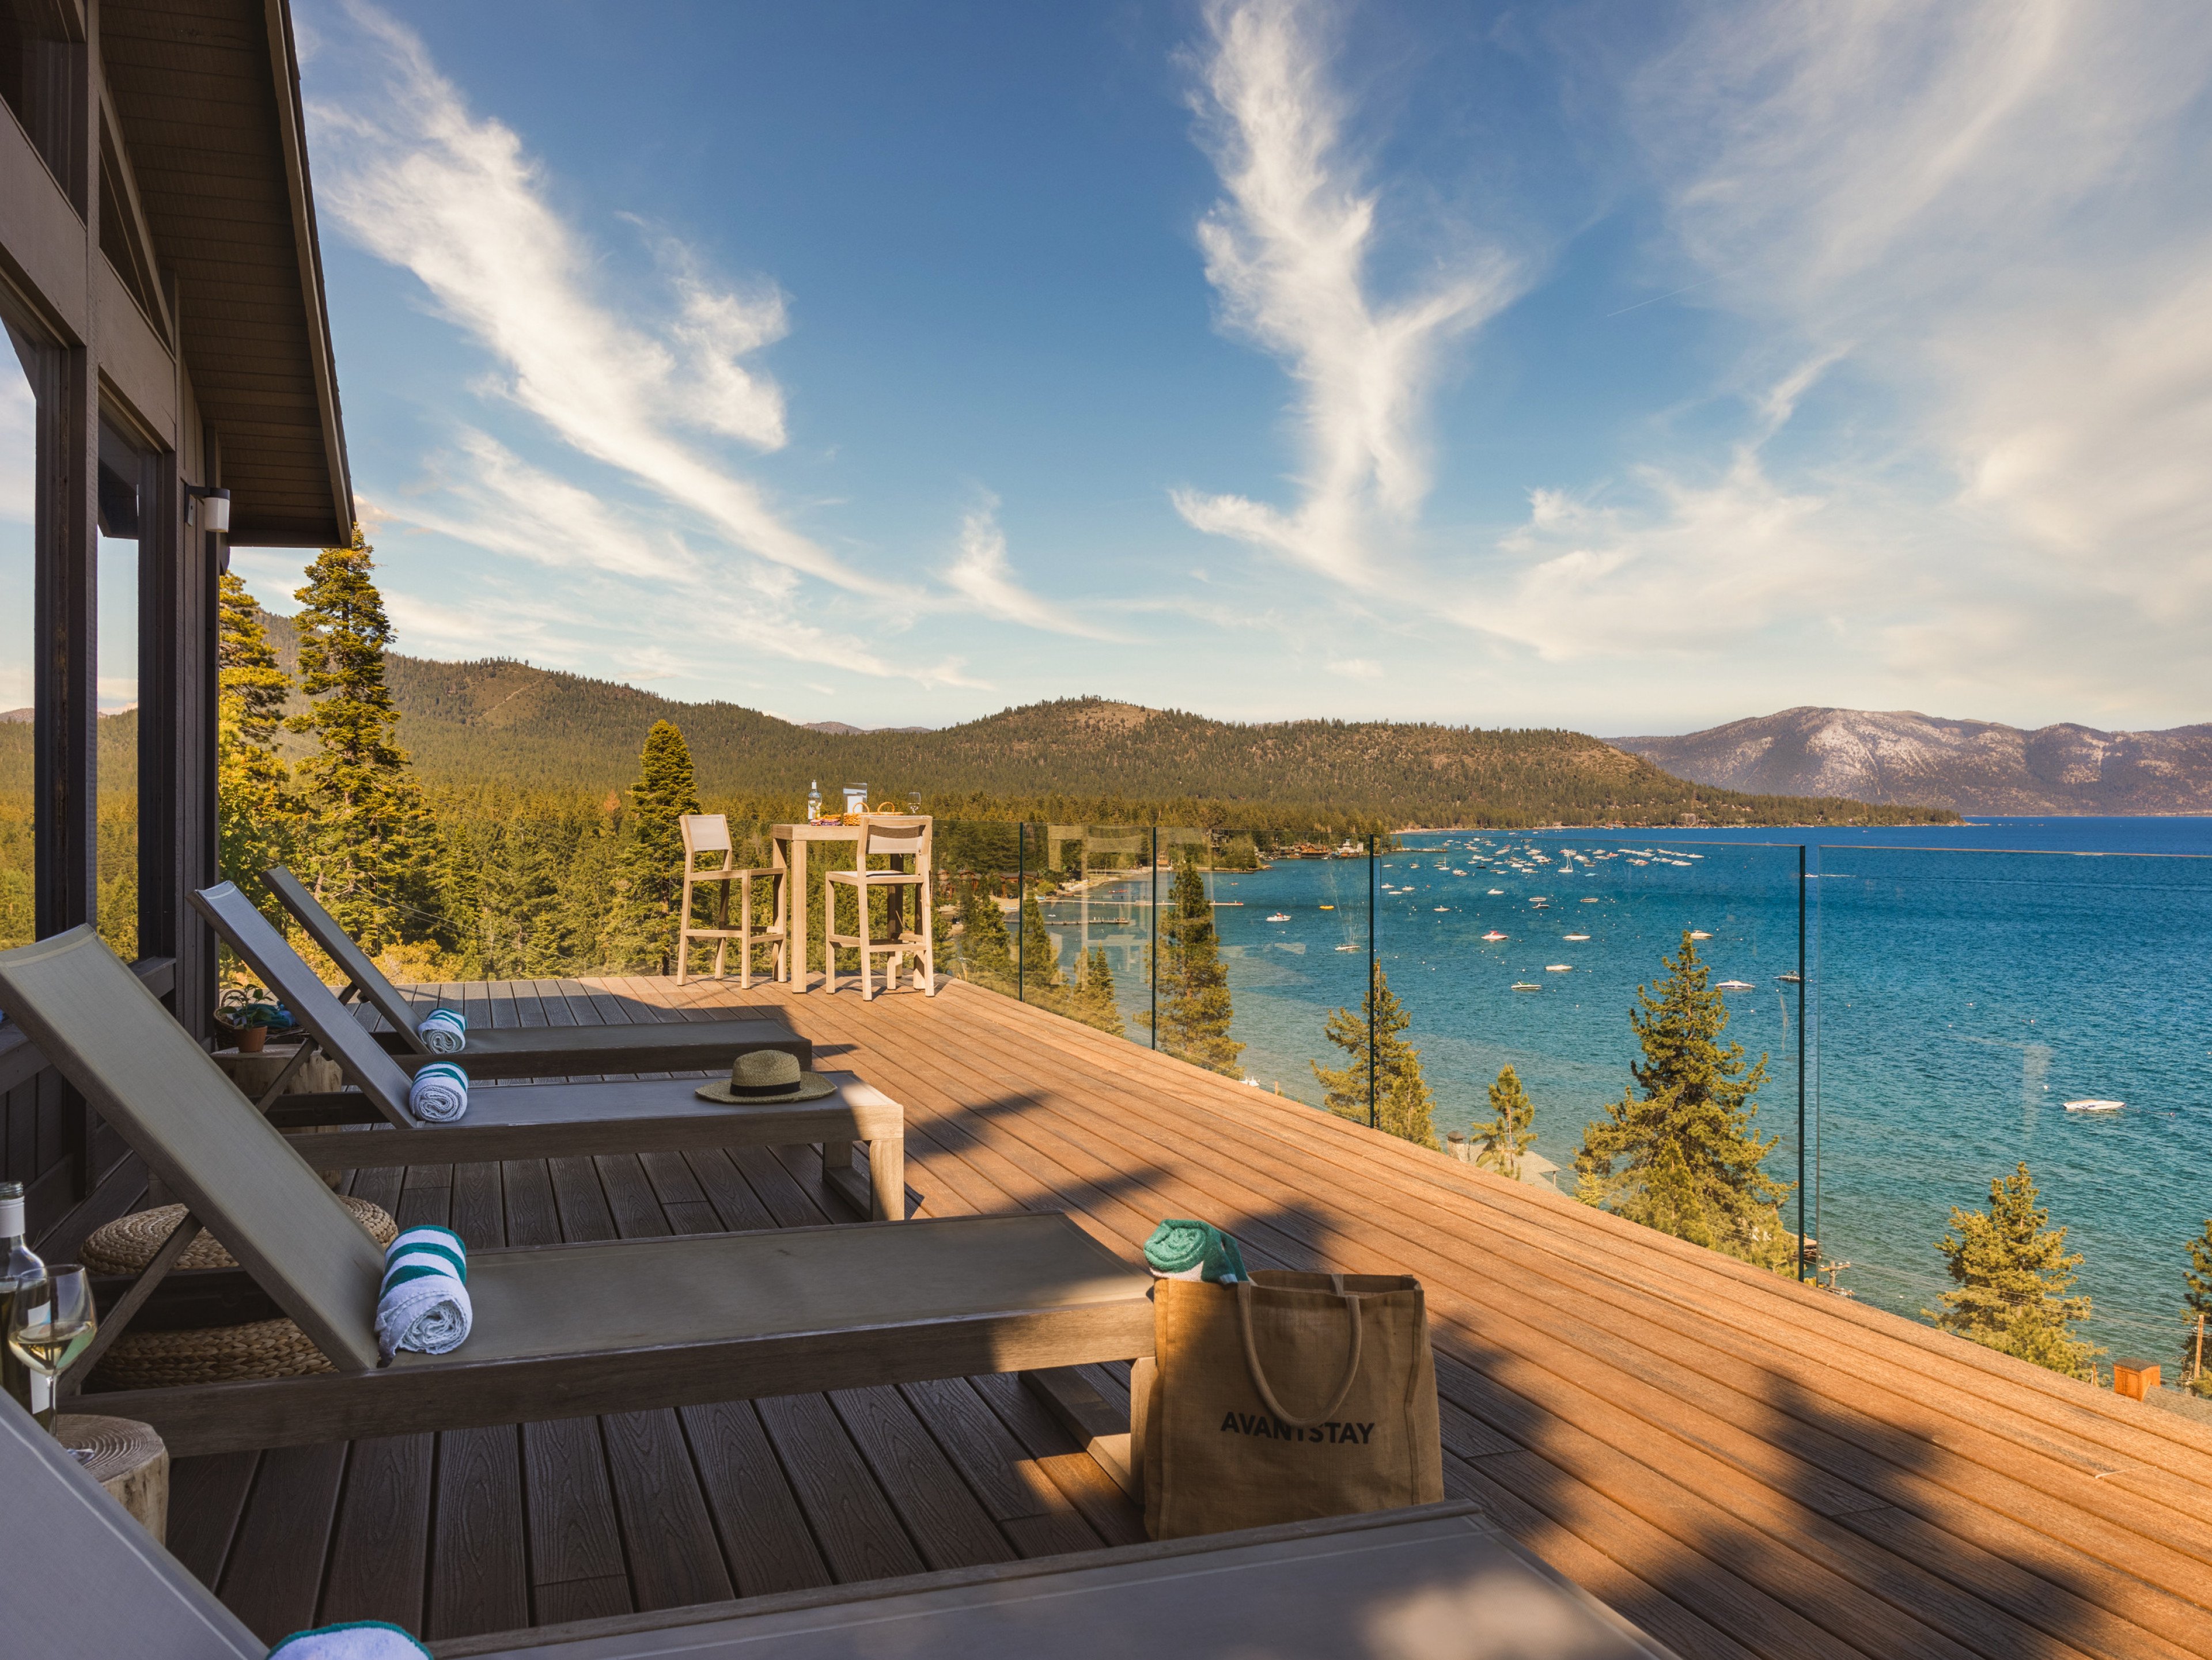 Lake Tahoe 92 - Lake house rentals for vacations